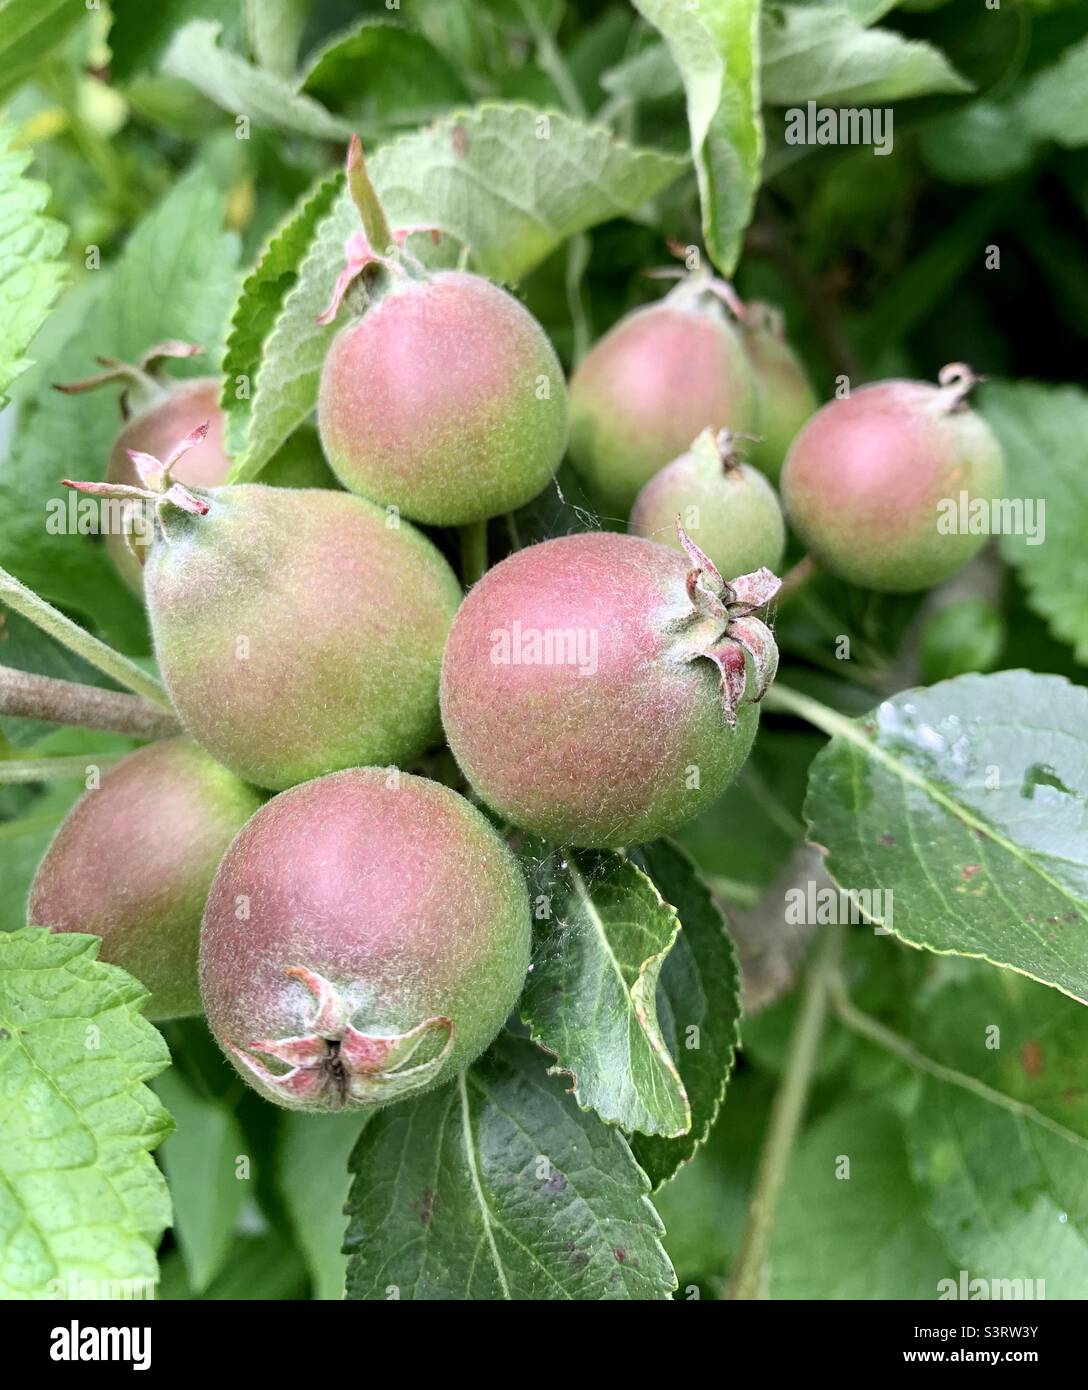 Apples growing on fruit tree Stock Photo